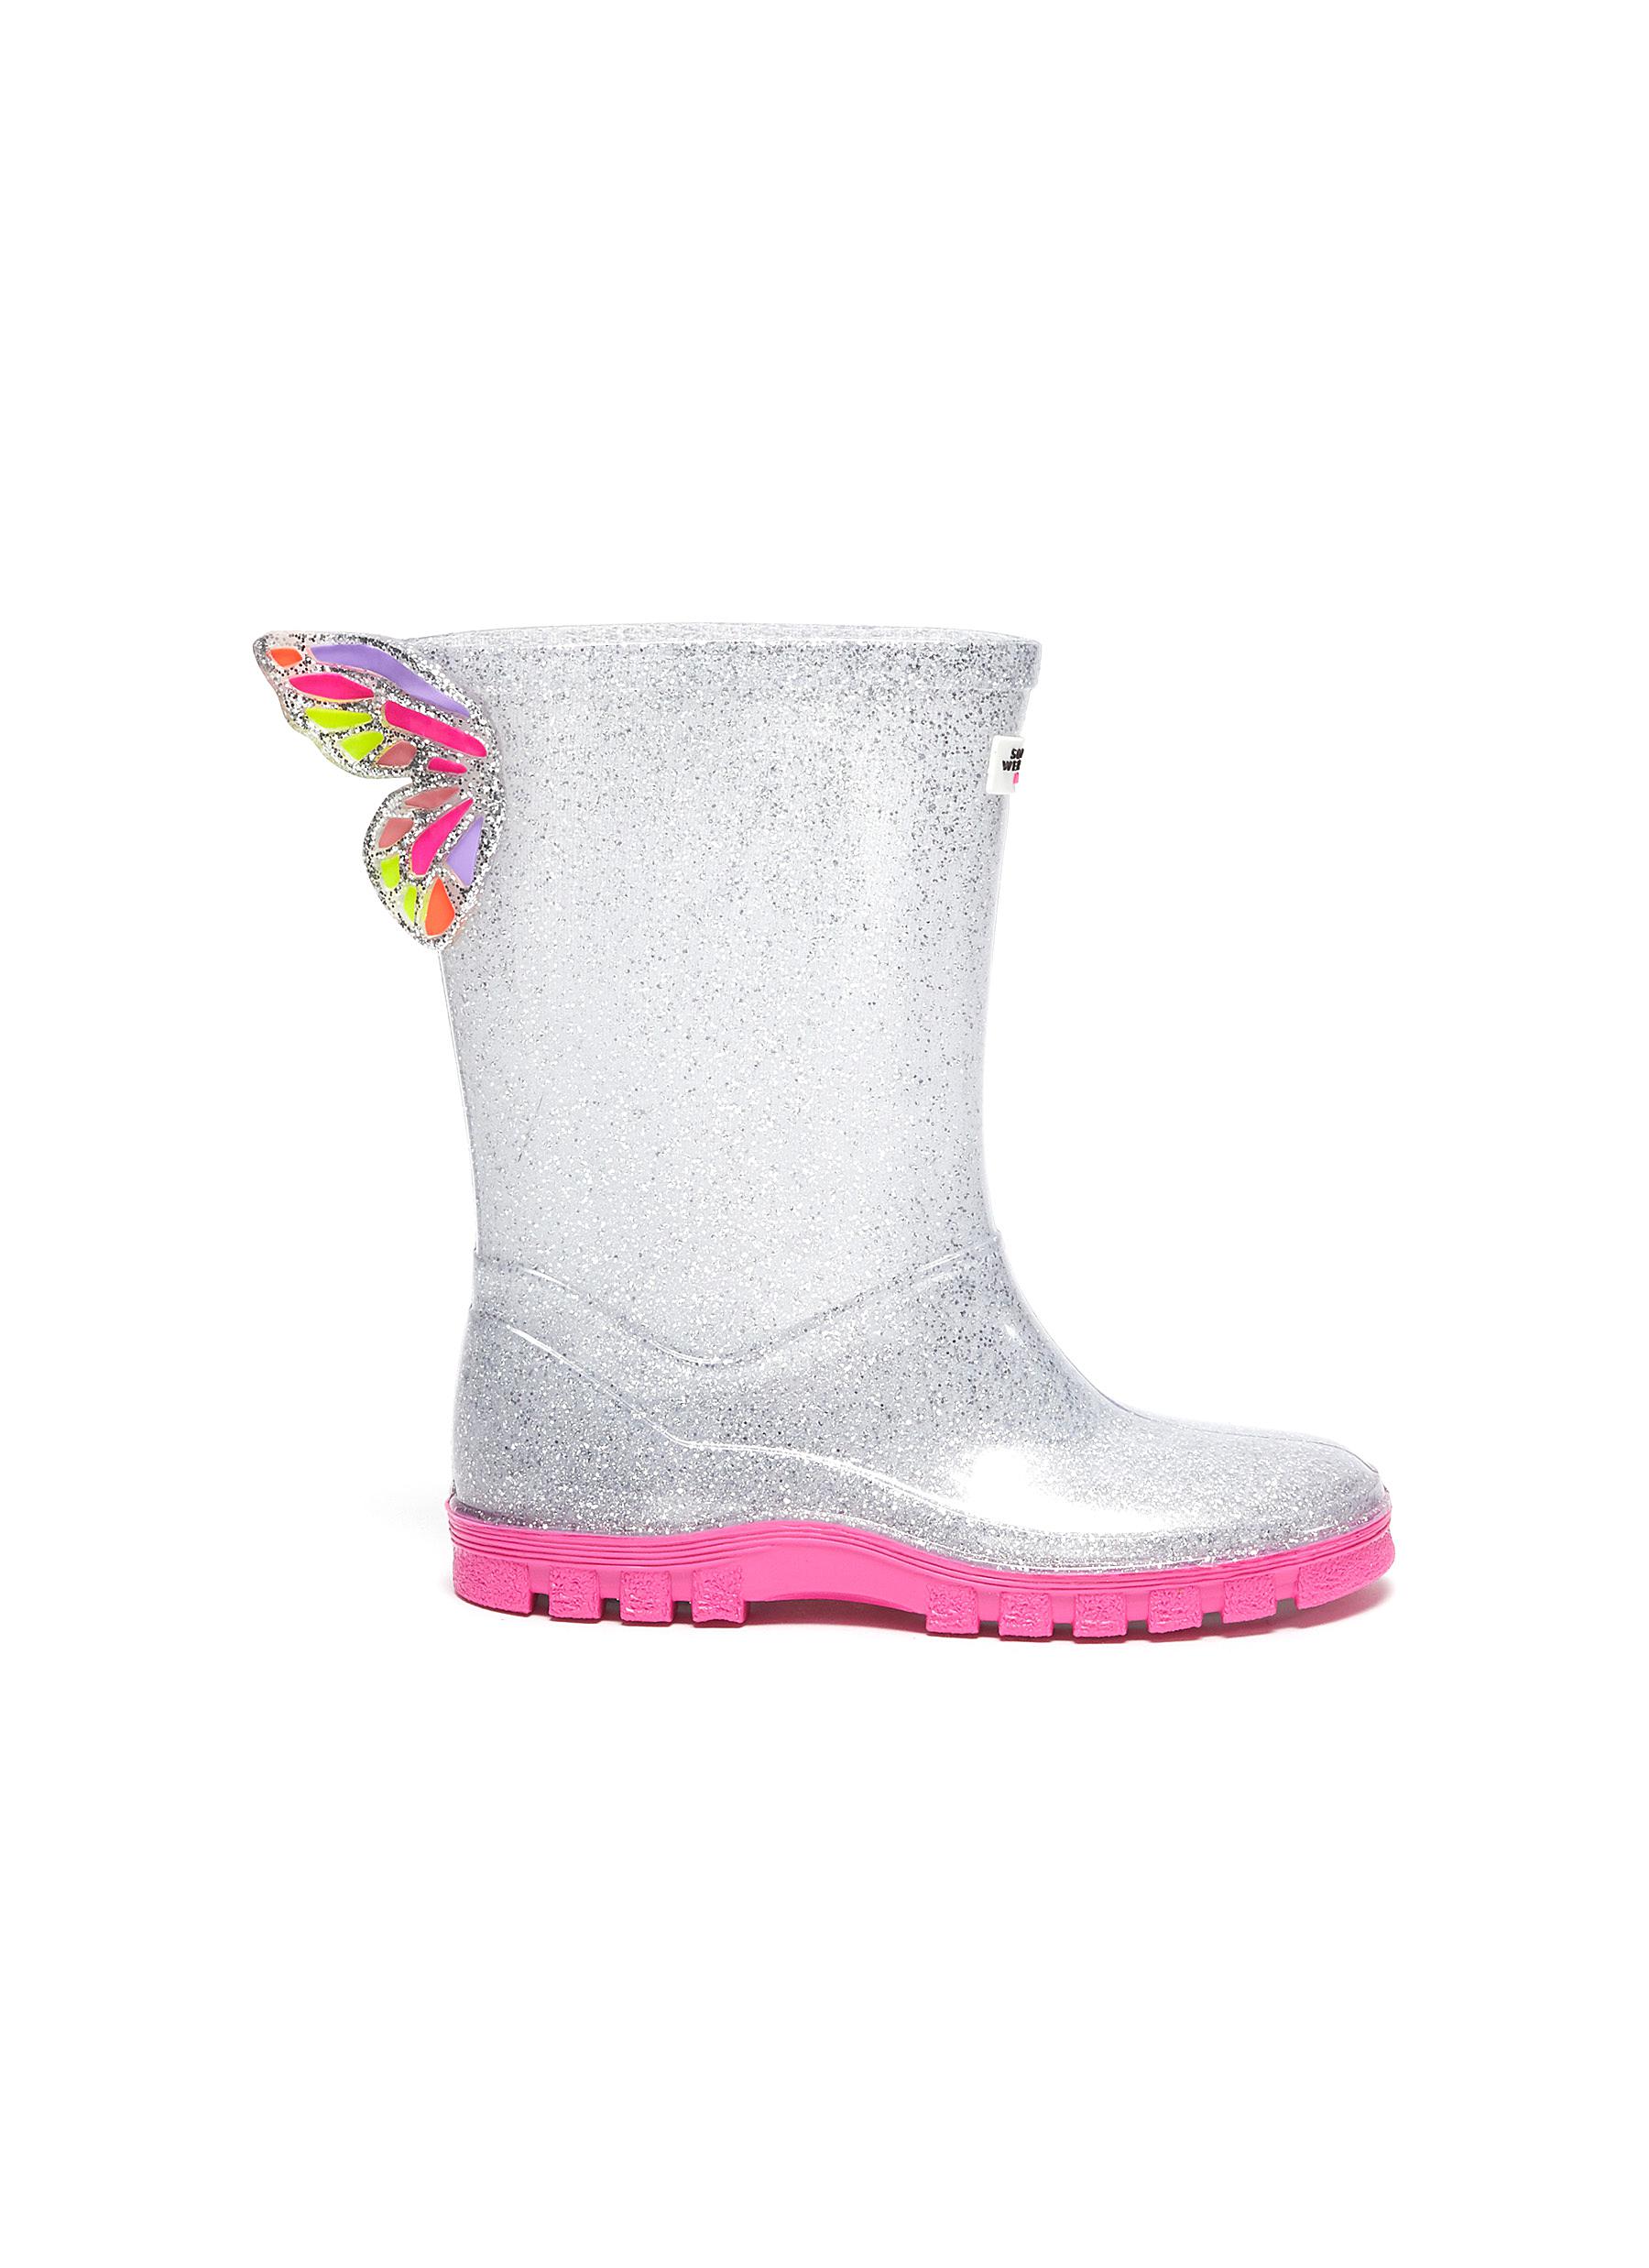 sophia webster snow boots